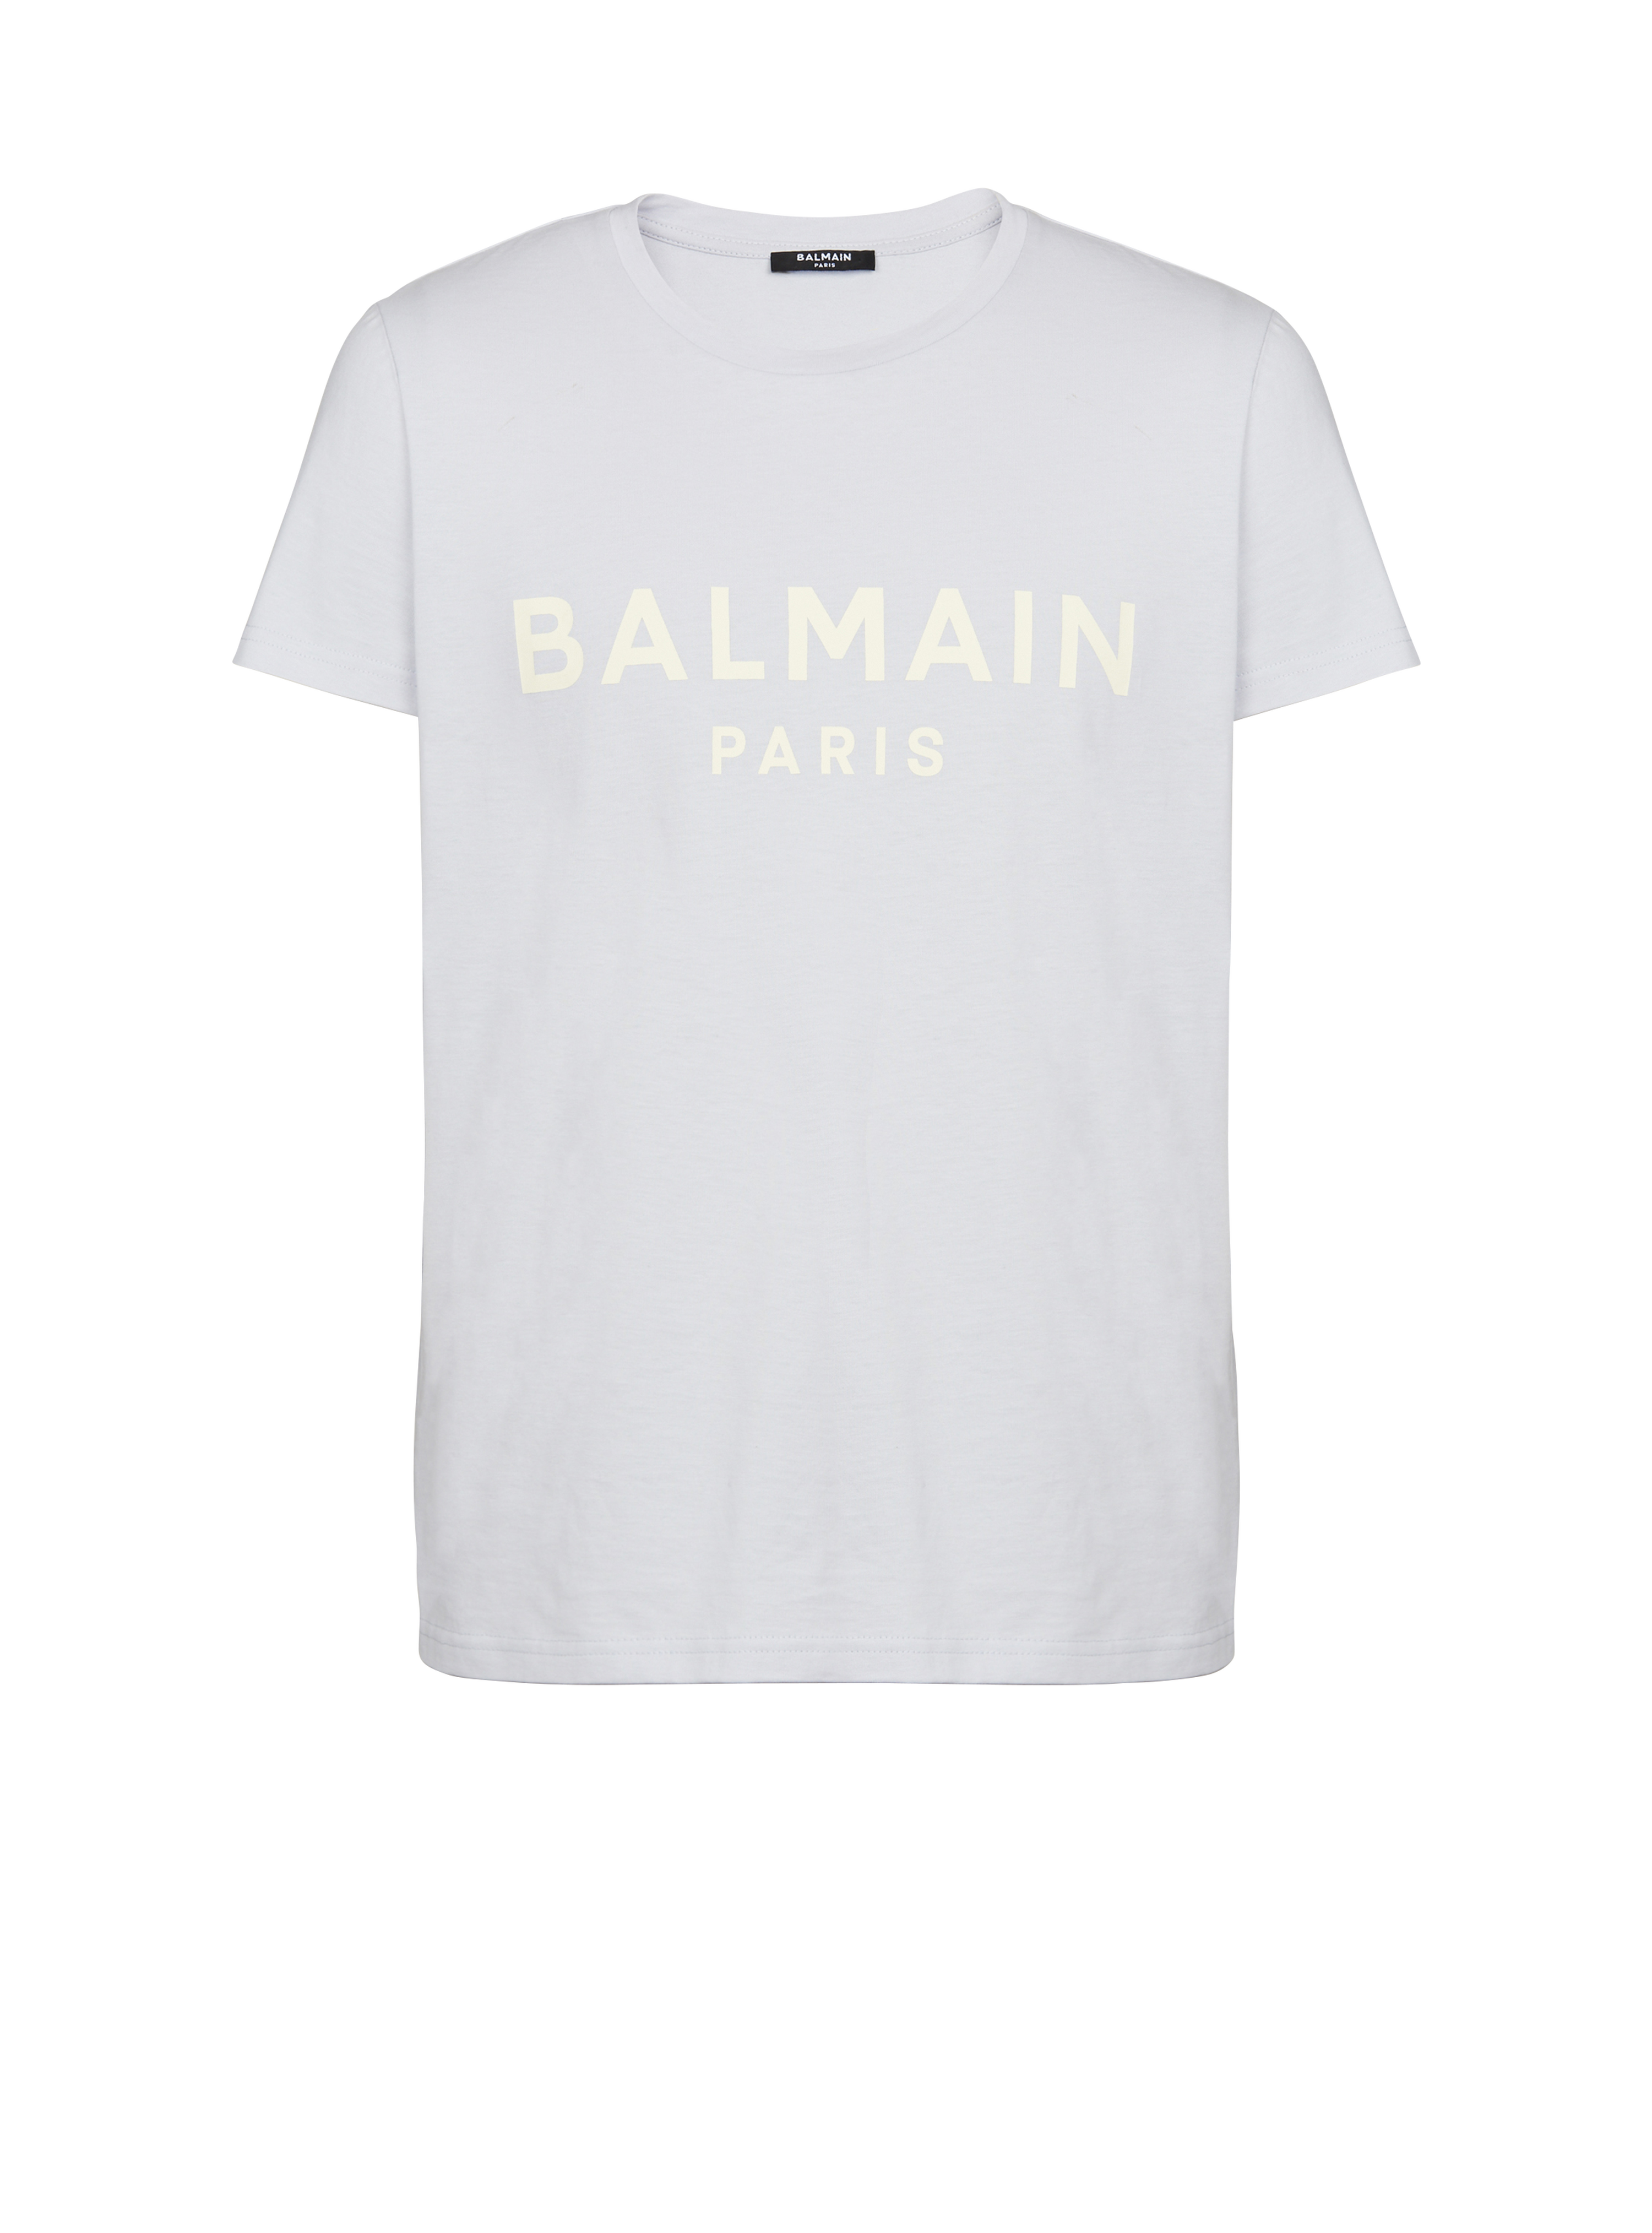 Cotton printed Balmain Paris logo T-shirt, blue